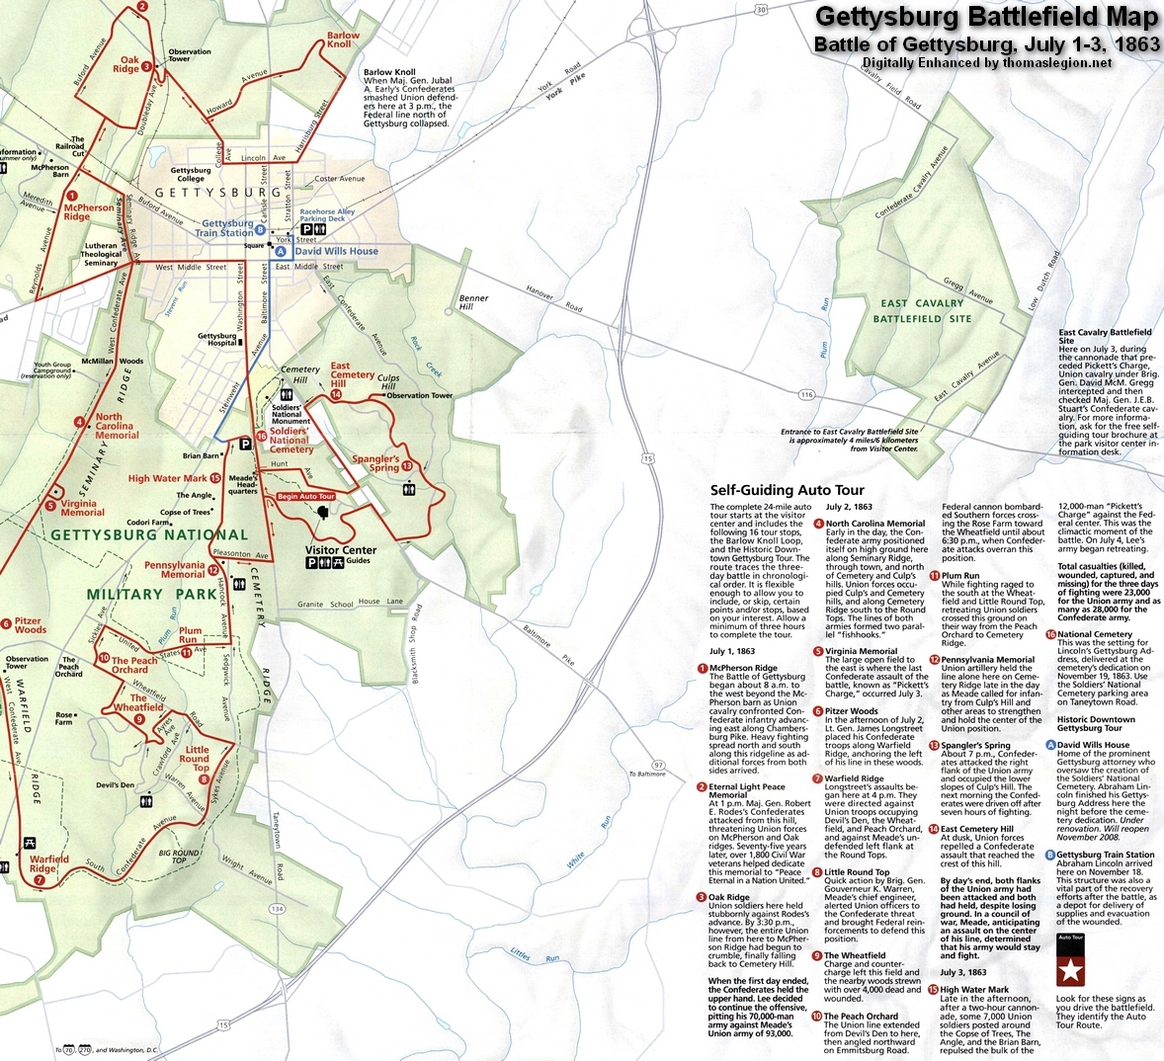 Official Gettysburg Battlefield Map.jpg